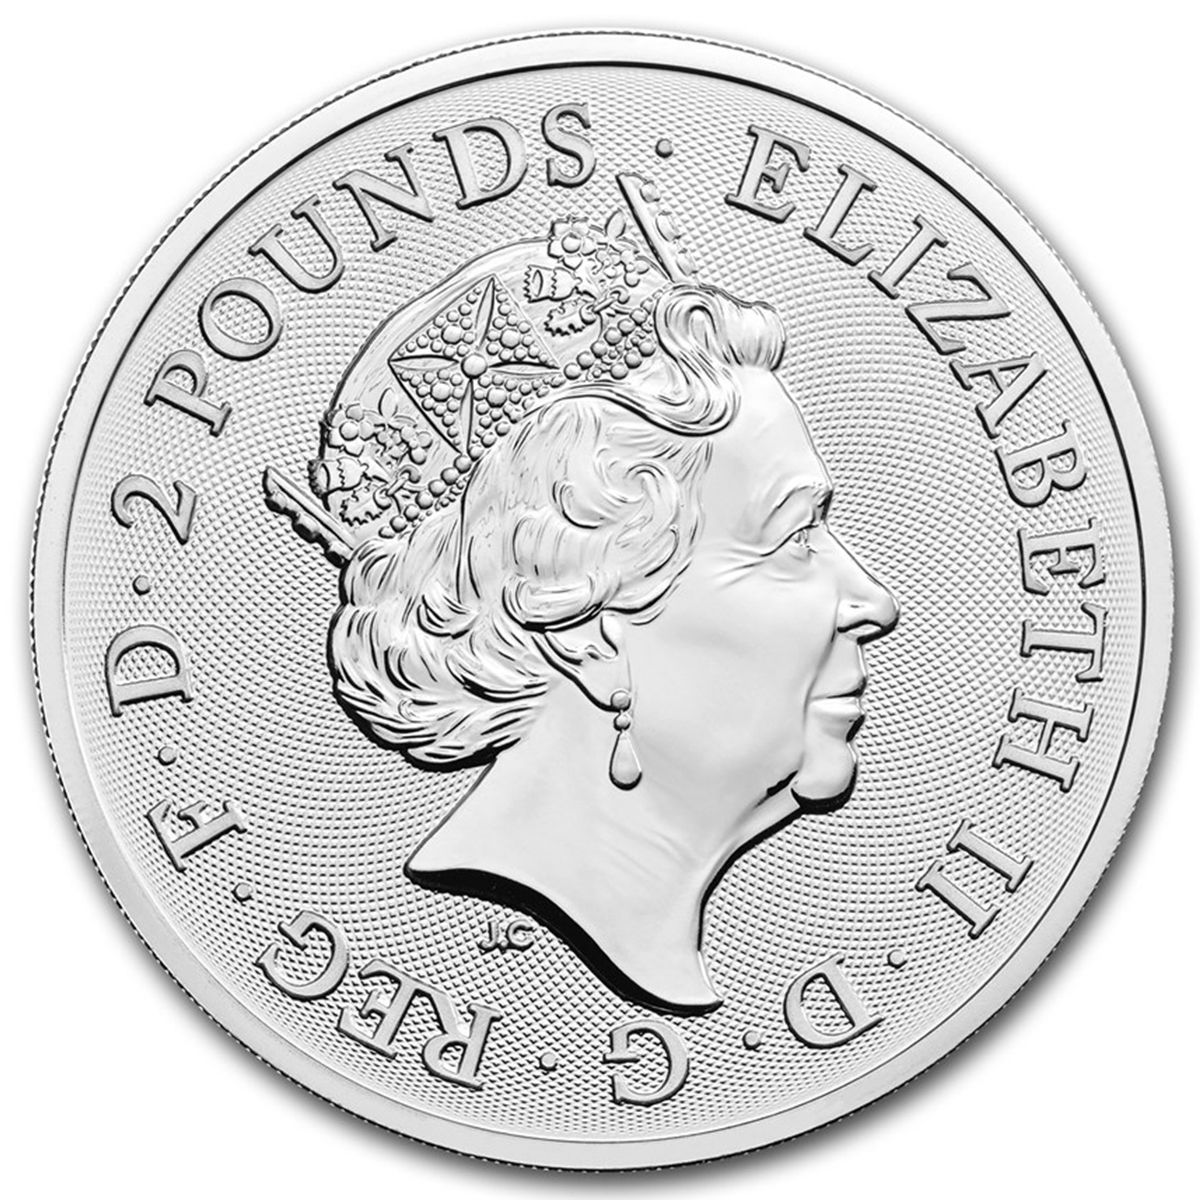 1 oz Silver Coin - David Bowie